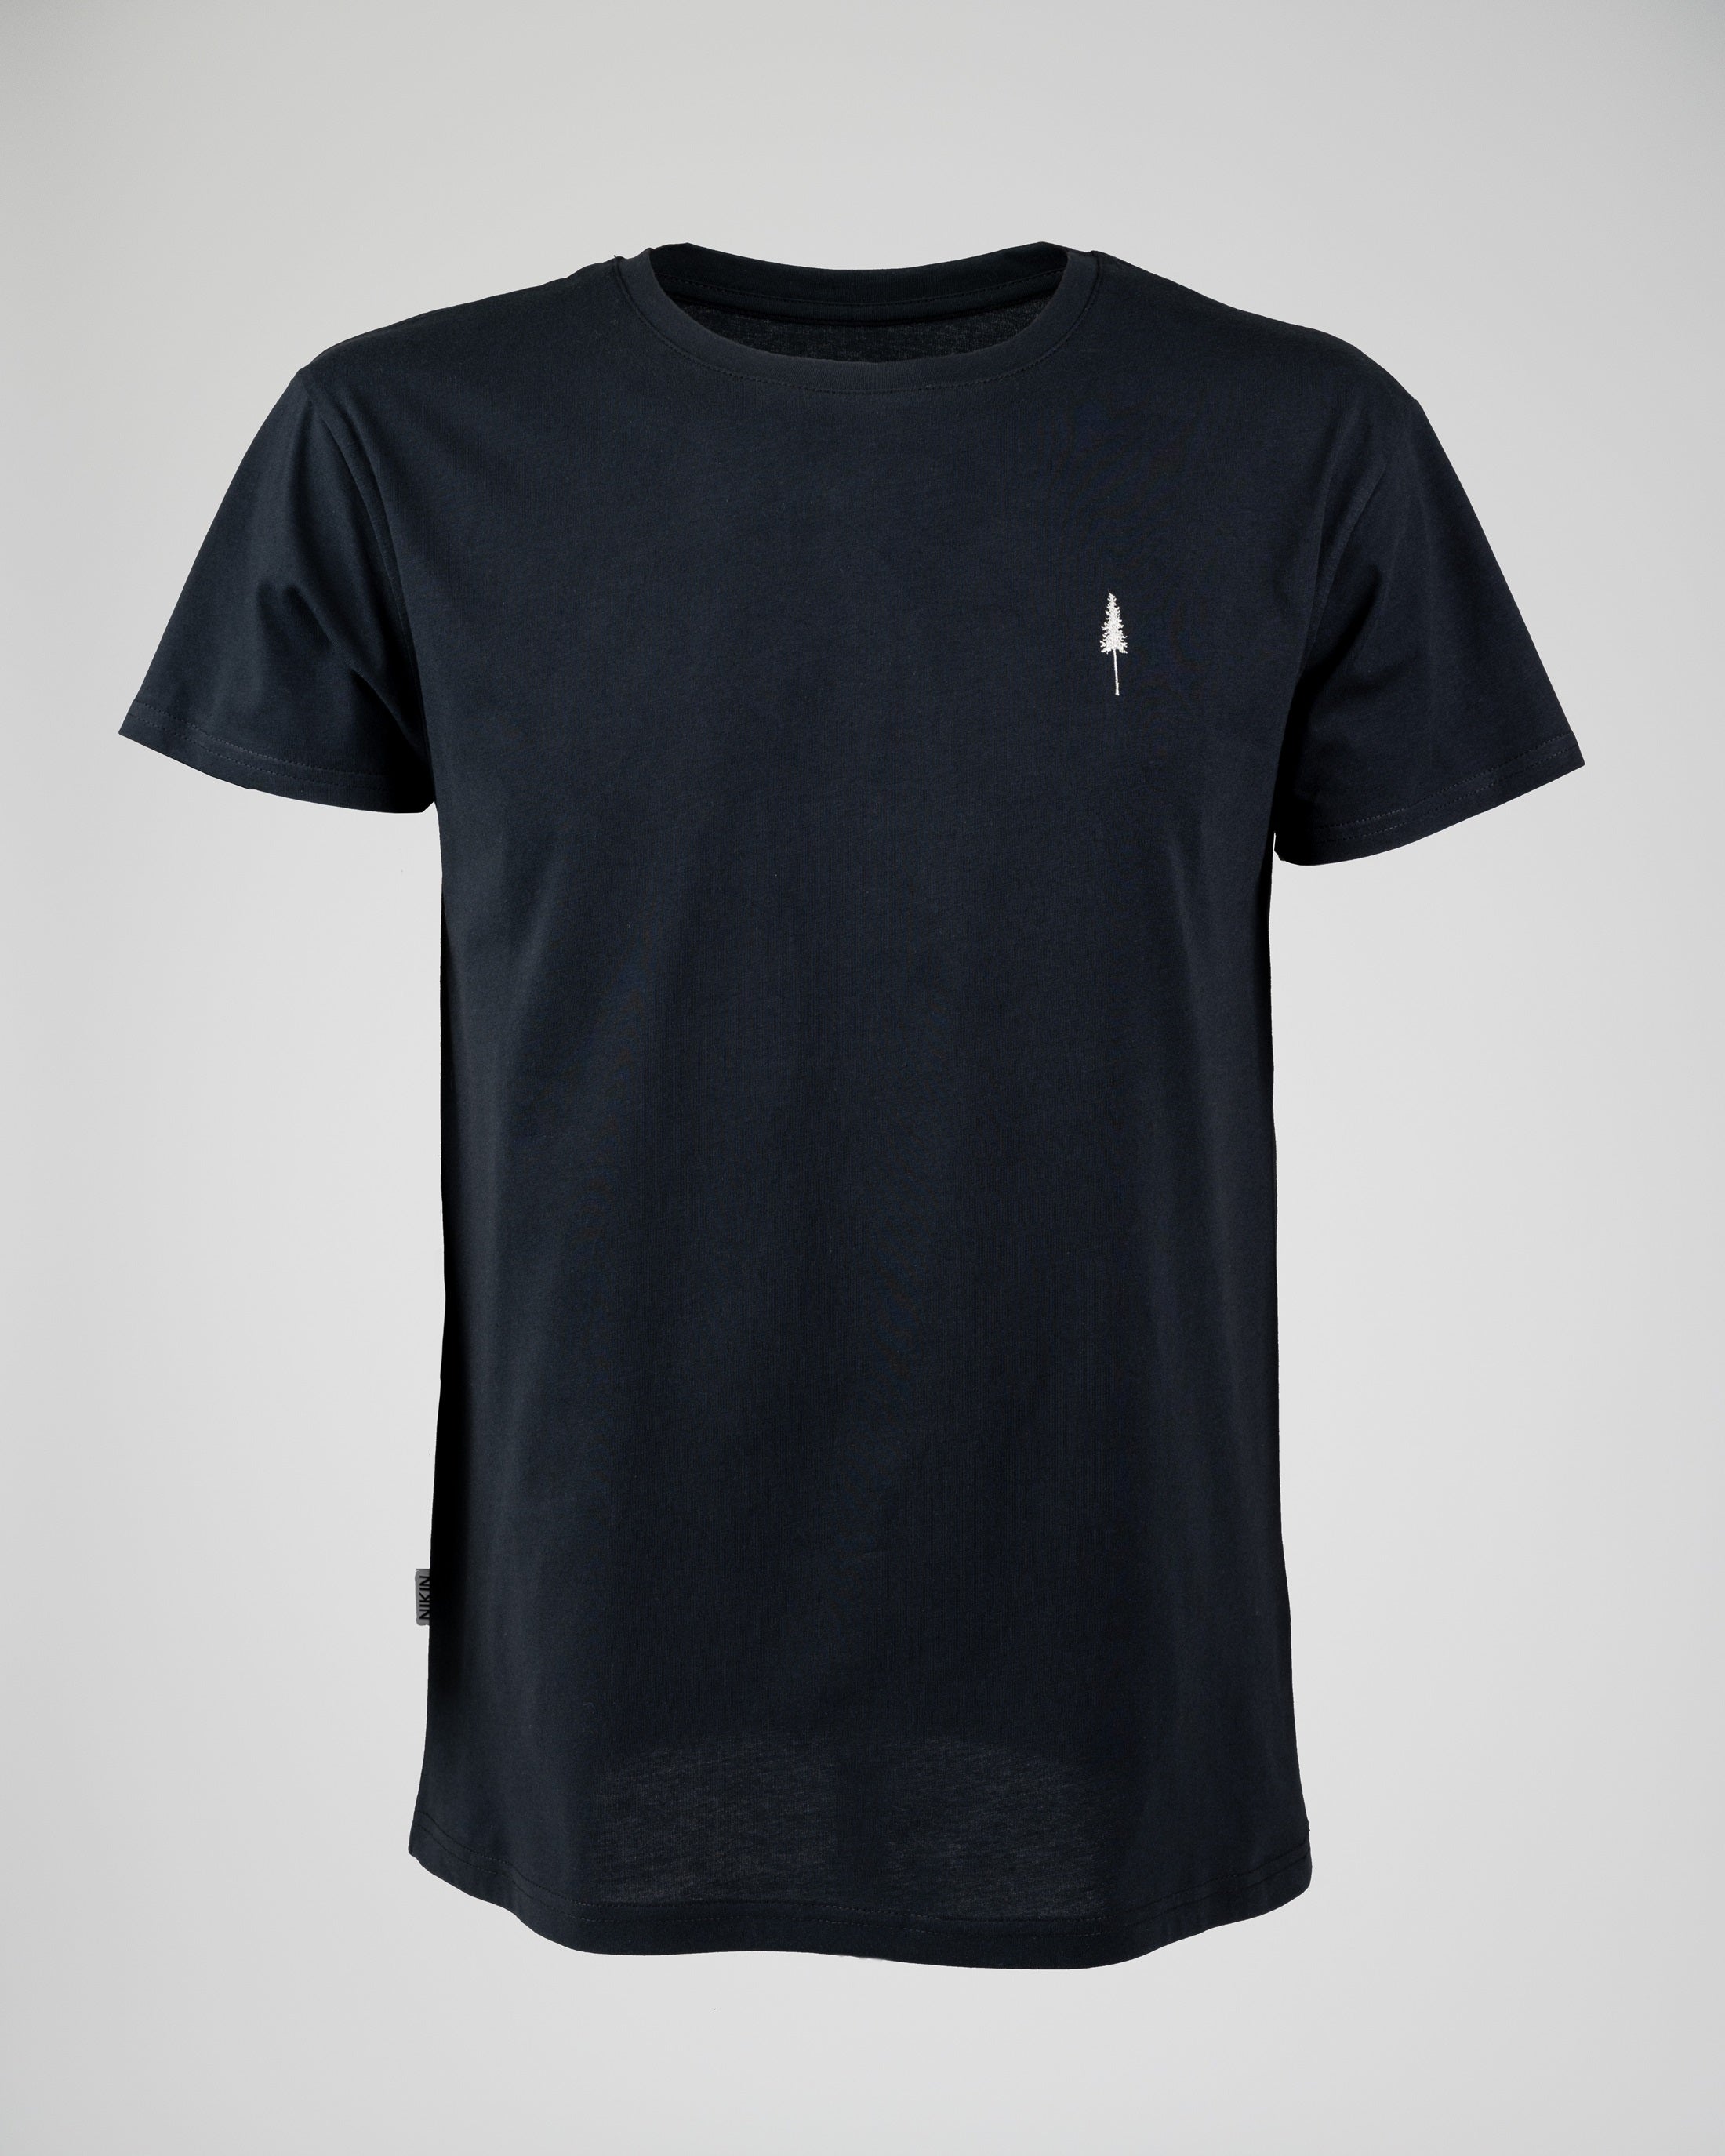 Men's organic cotton T-shirt Treeshirt Black